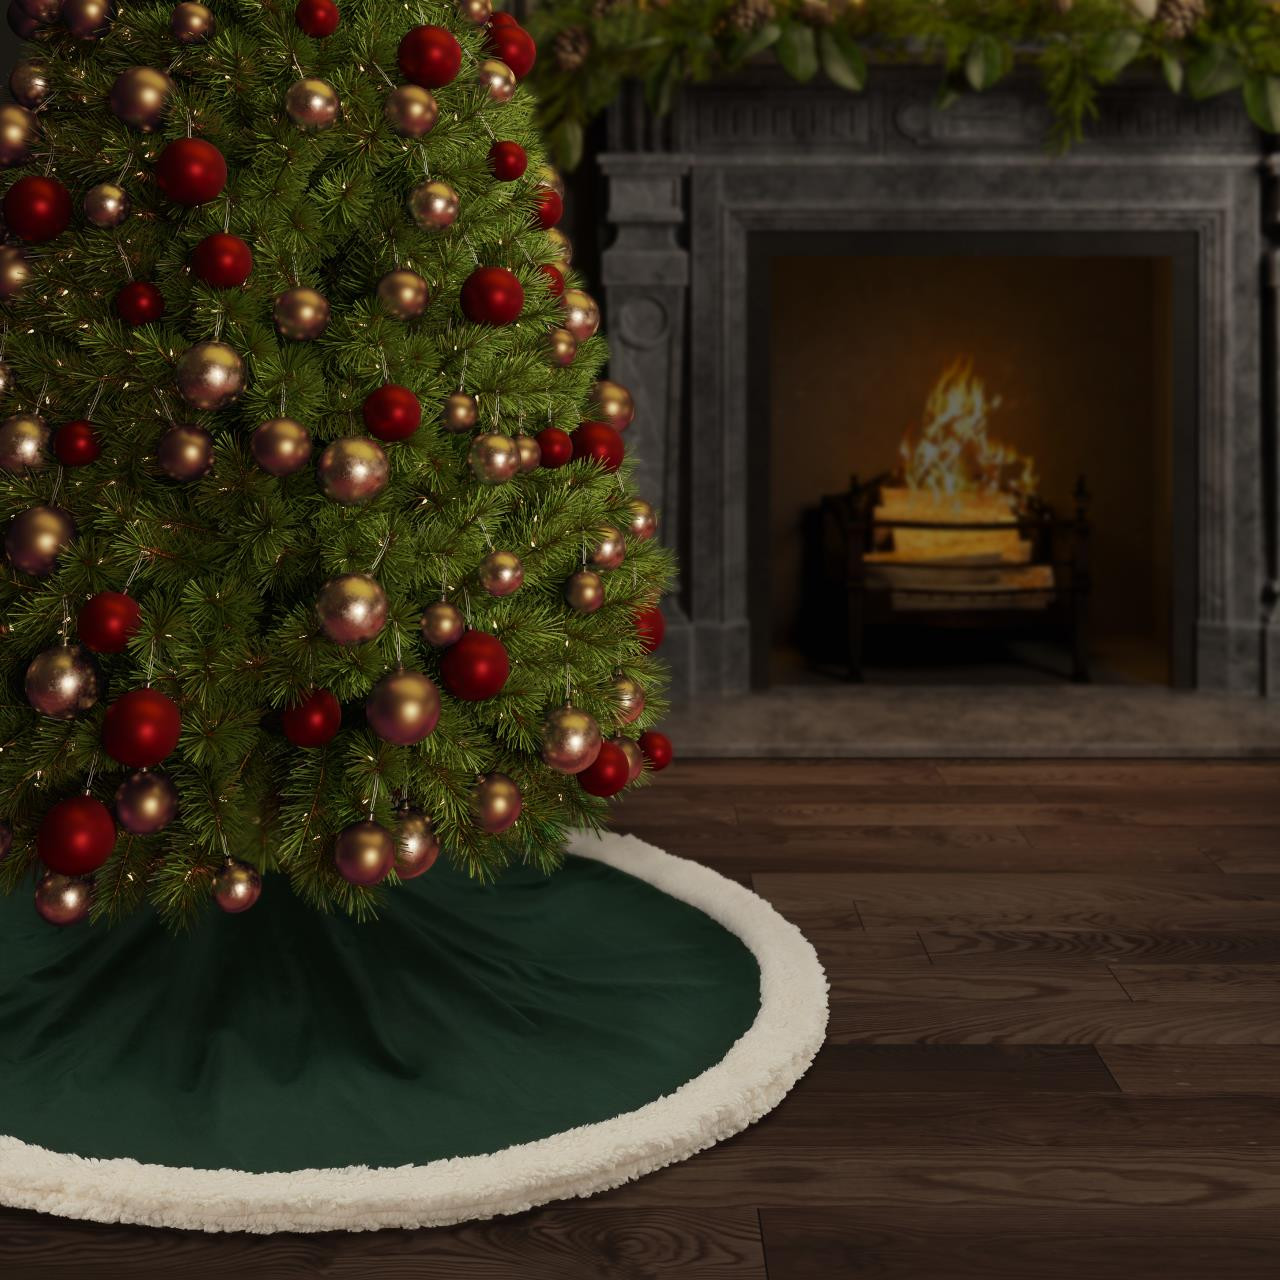 Casey Sherpa Evergreen Christmas Tree Skirt - 193842131862